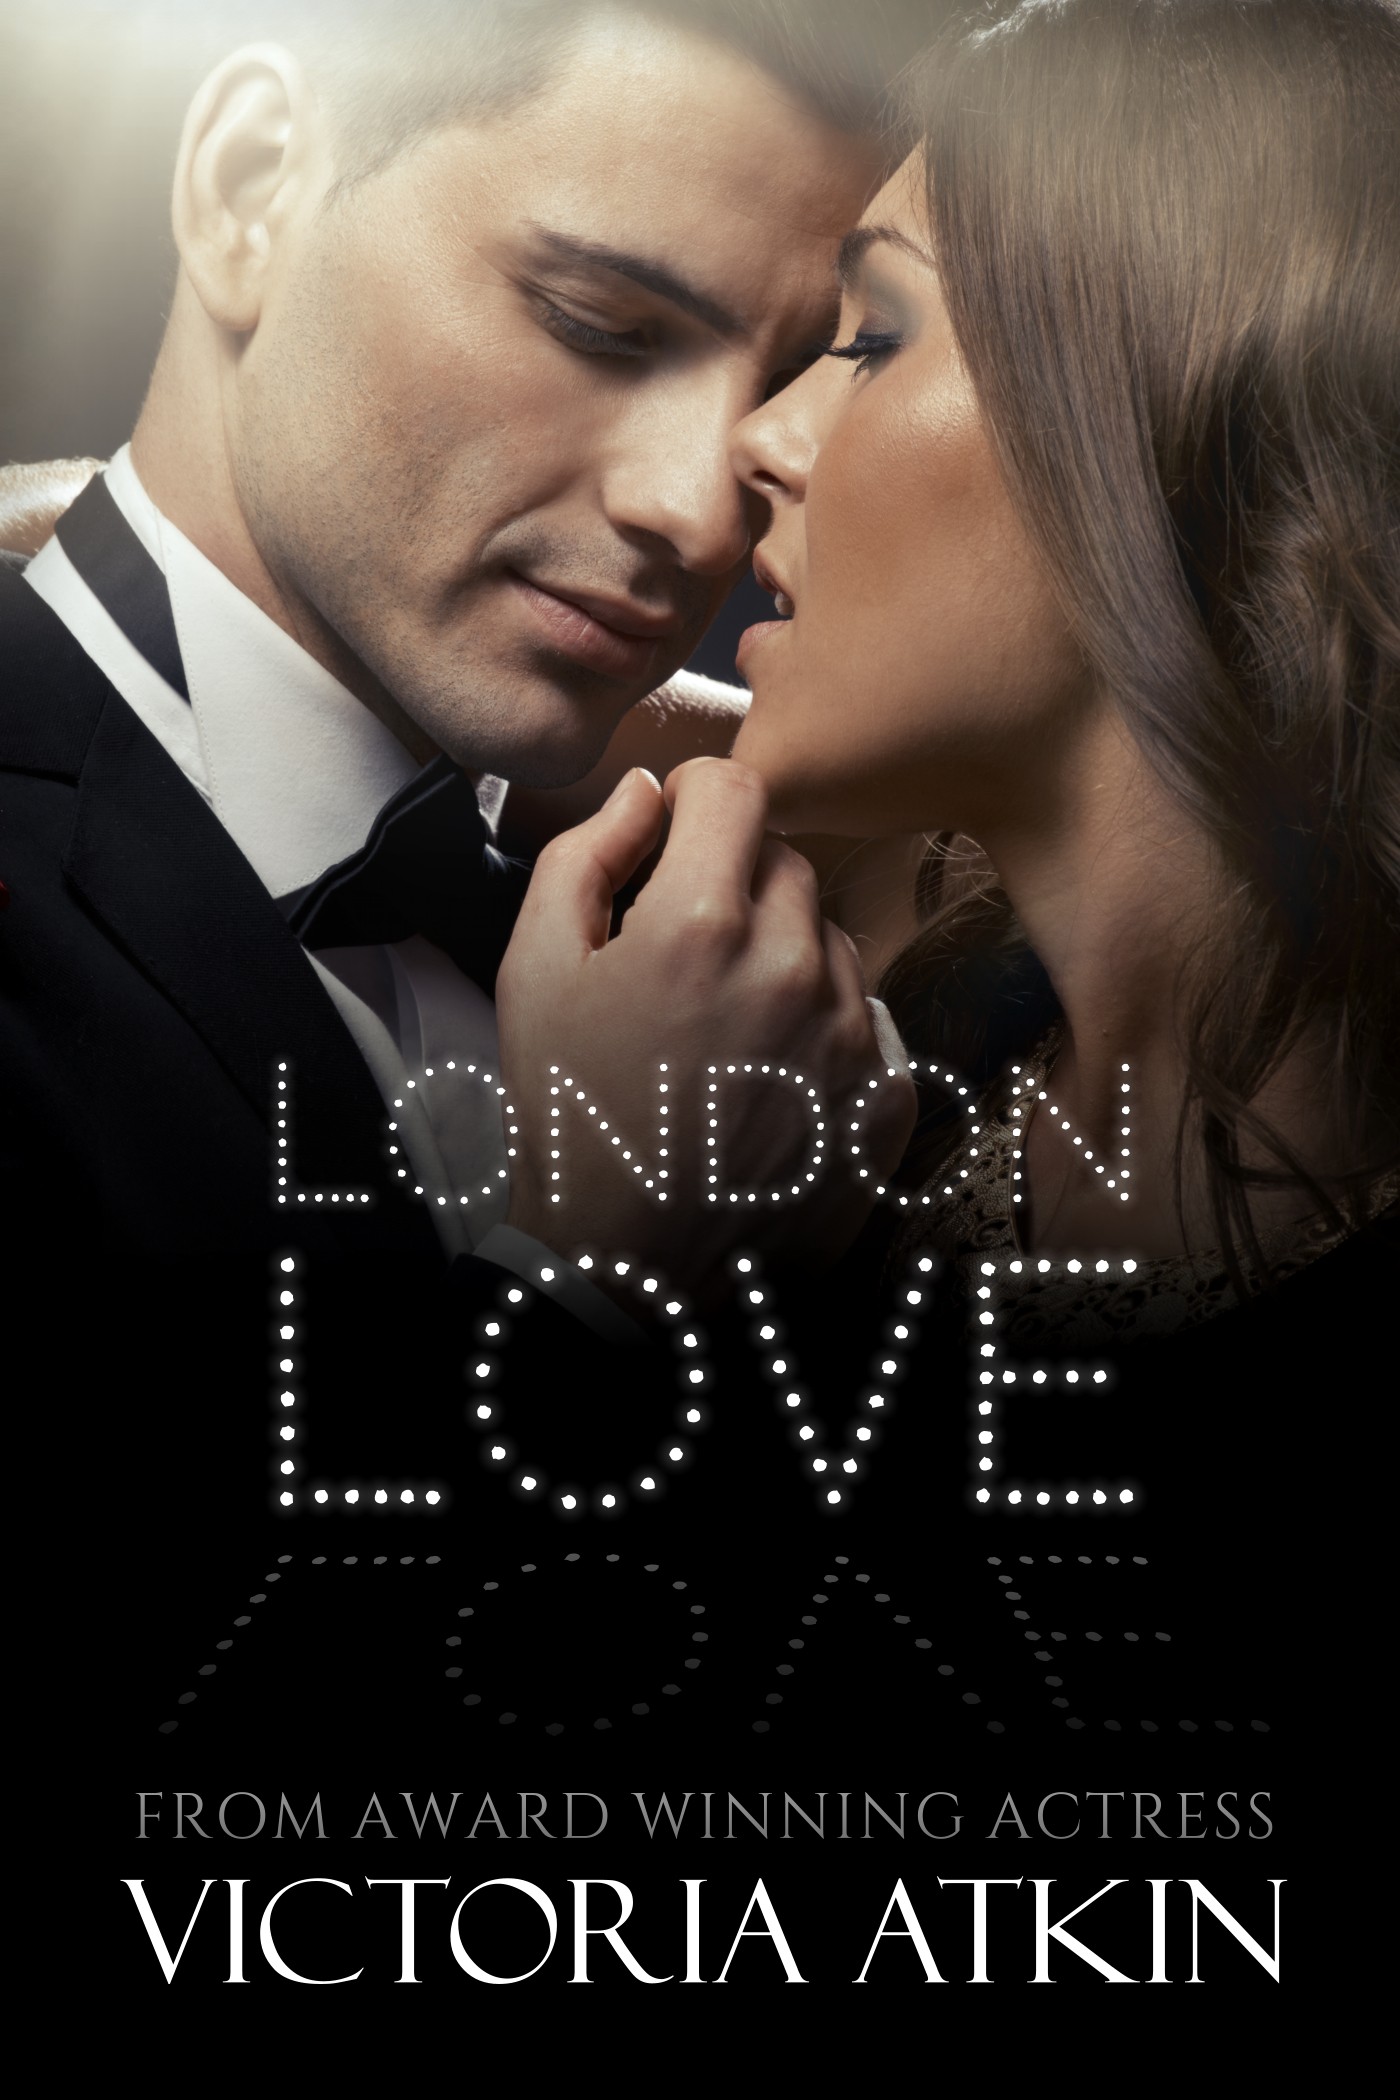 London Love_E-Cover - 2-7-15_V ATKIN